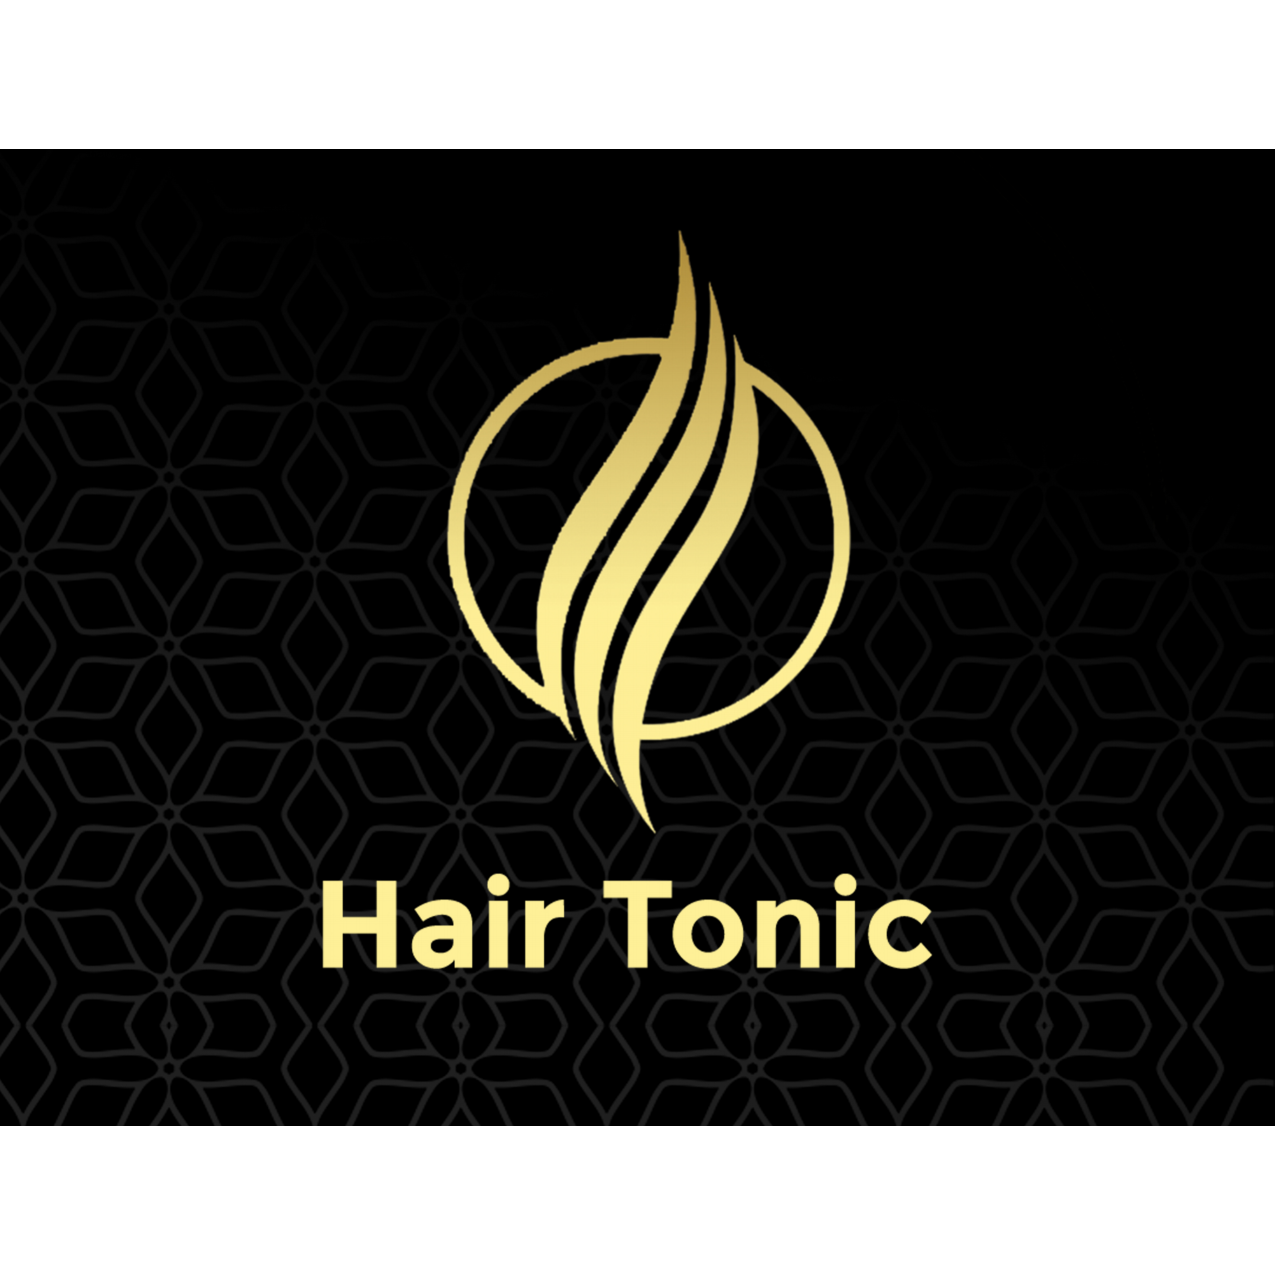 Hair Tonic Friseursalon und Kosmetik München in München - Logo